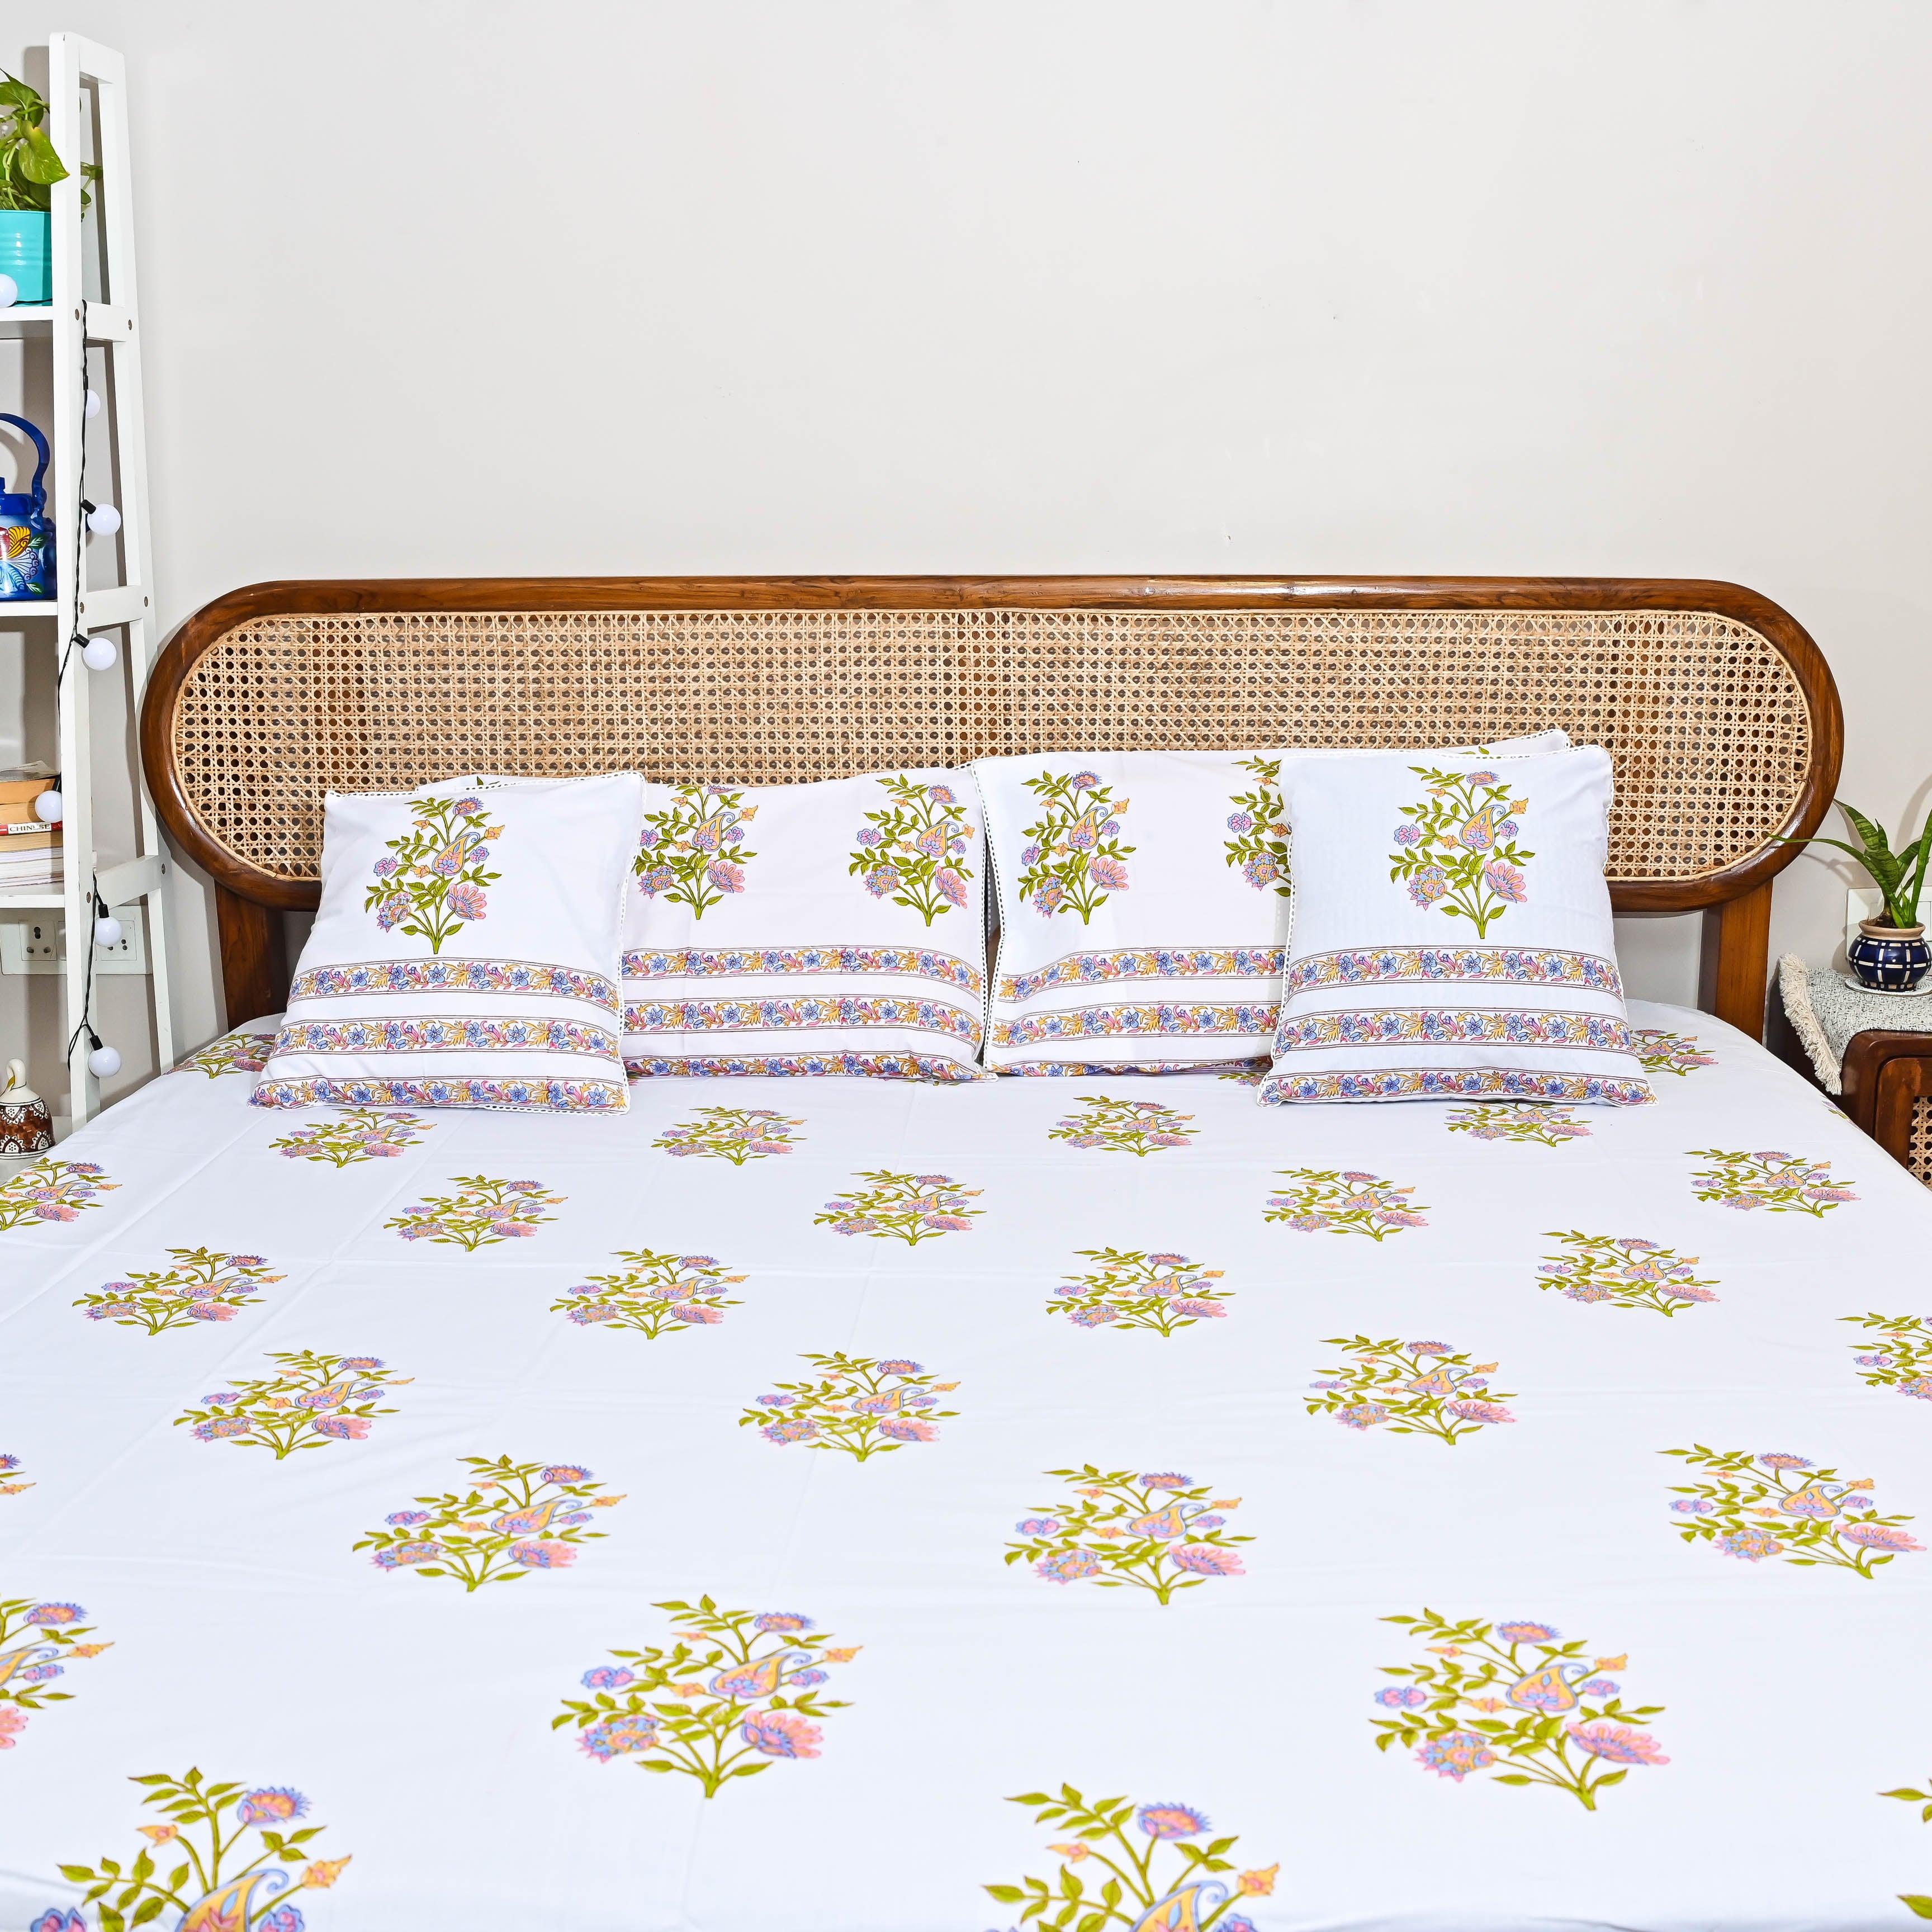  Heavenly Floral Handblock Printed Cotton Bedsheet Online